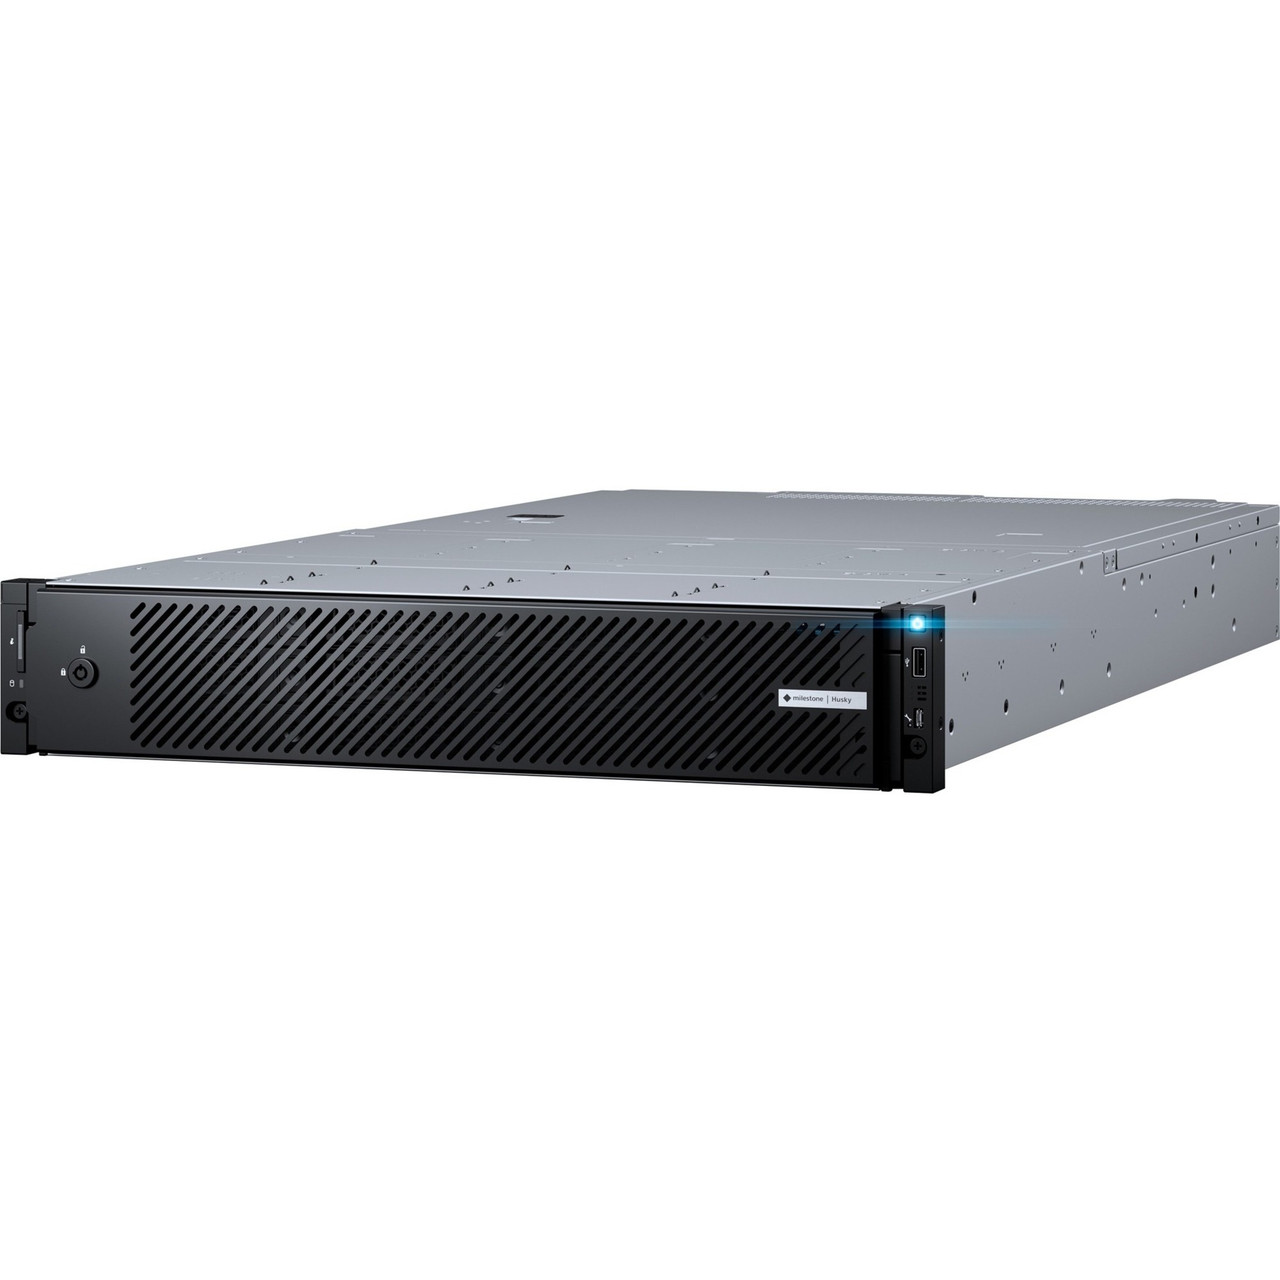 Milestone Systems Husky IVO 1800R Video Storage Appliance - 24 TB HDD - HE1800R-24TB